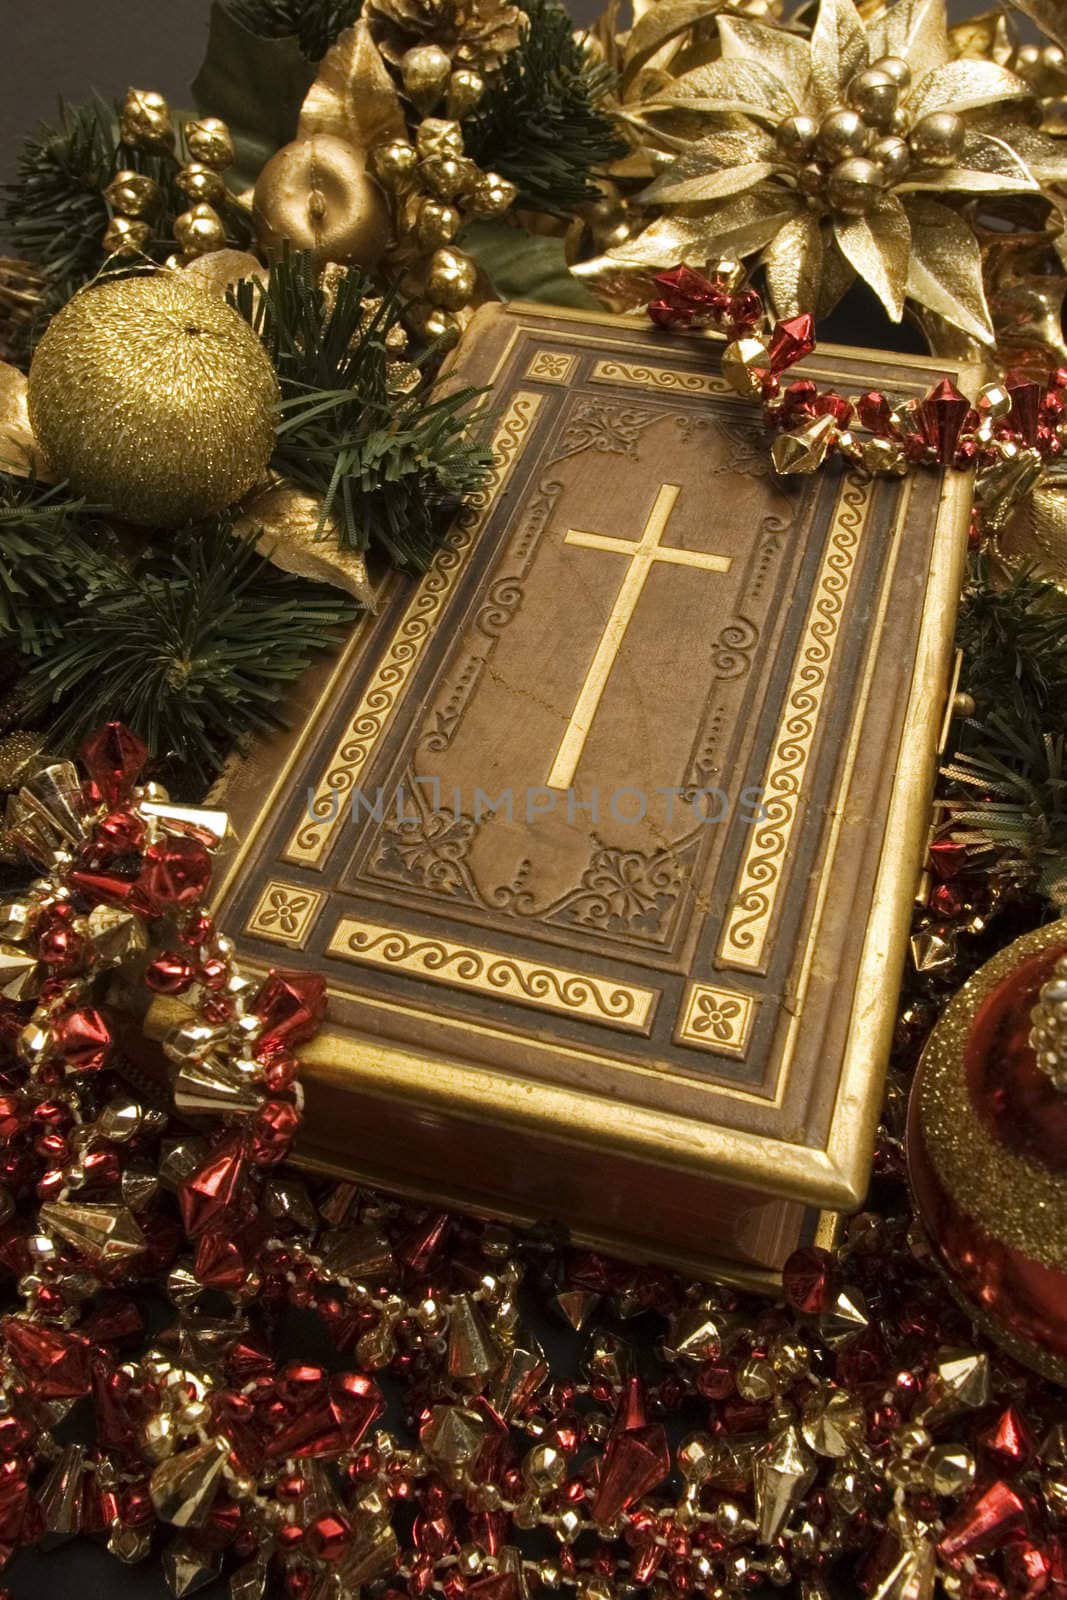 Christianity in Christmas by Gordo25